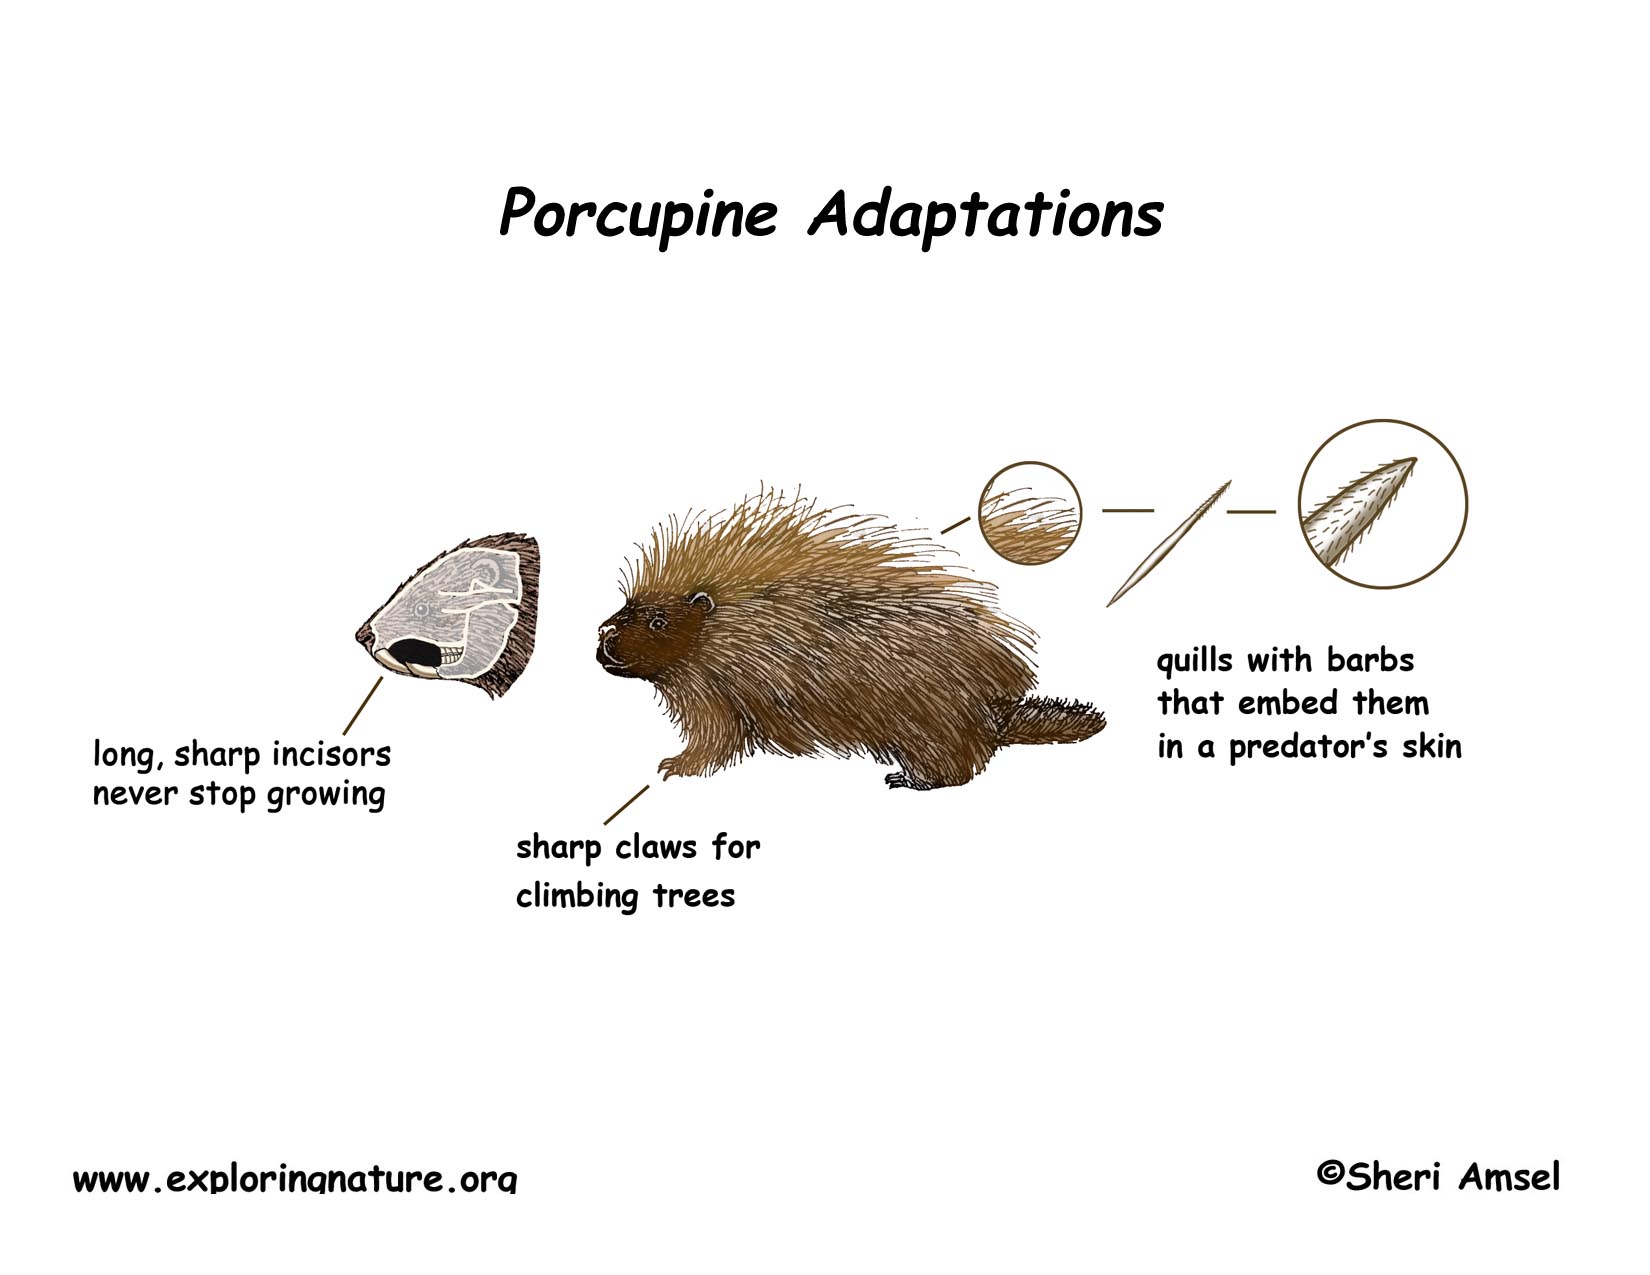 Do Porcupines Shoot Their Quills? (Fact Check) 4 Defense Behaviors